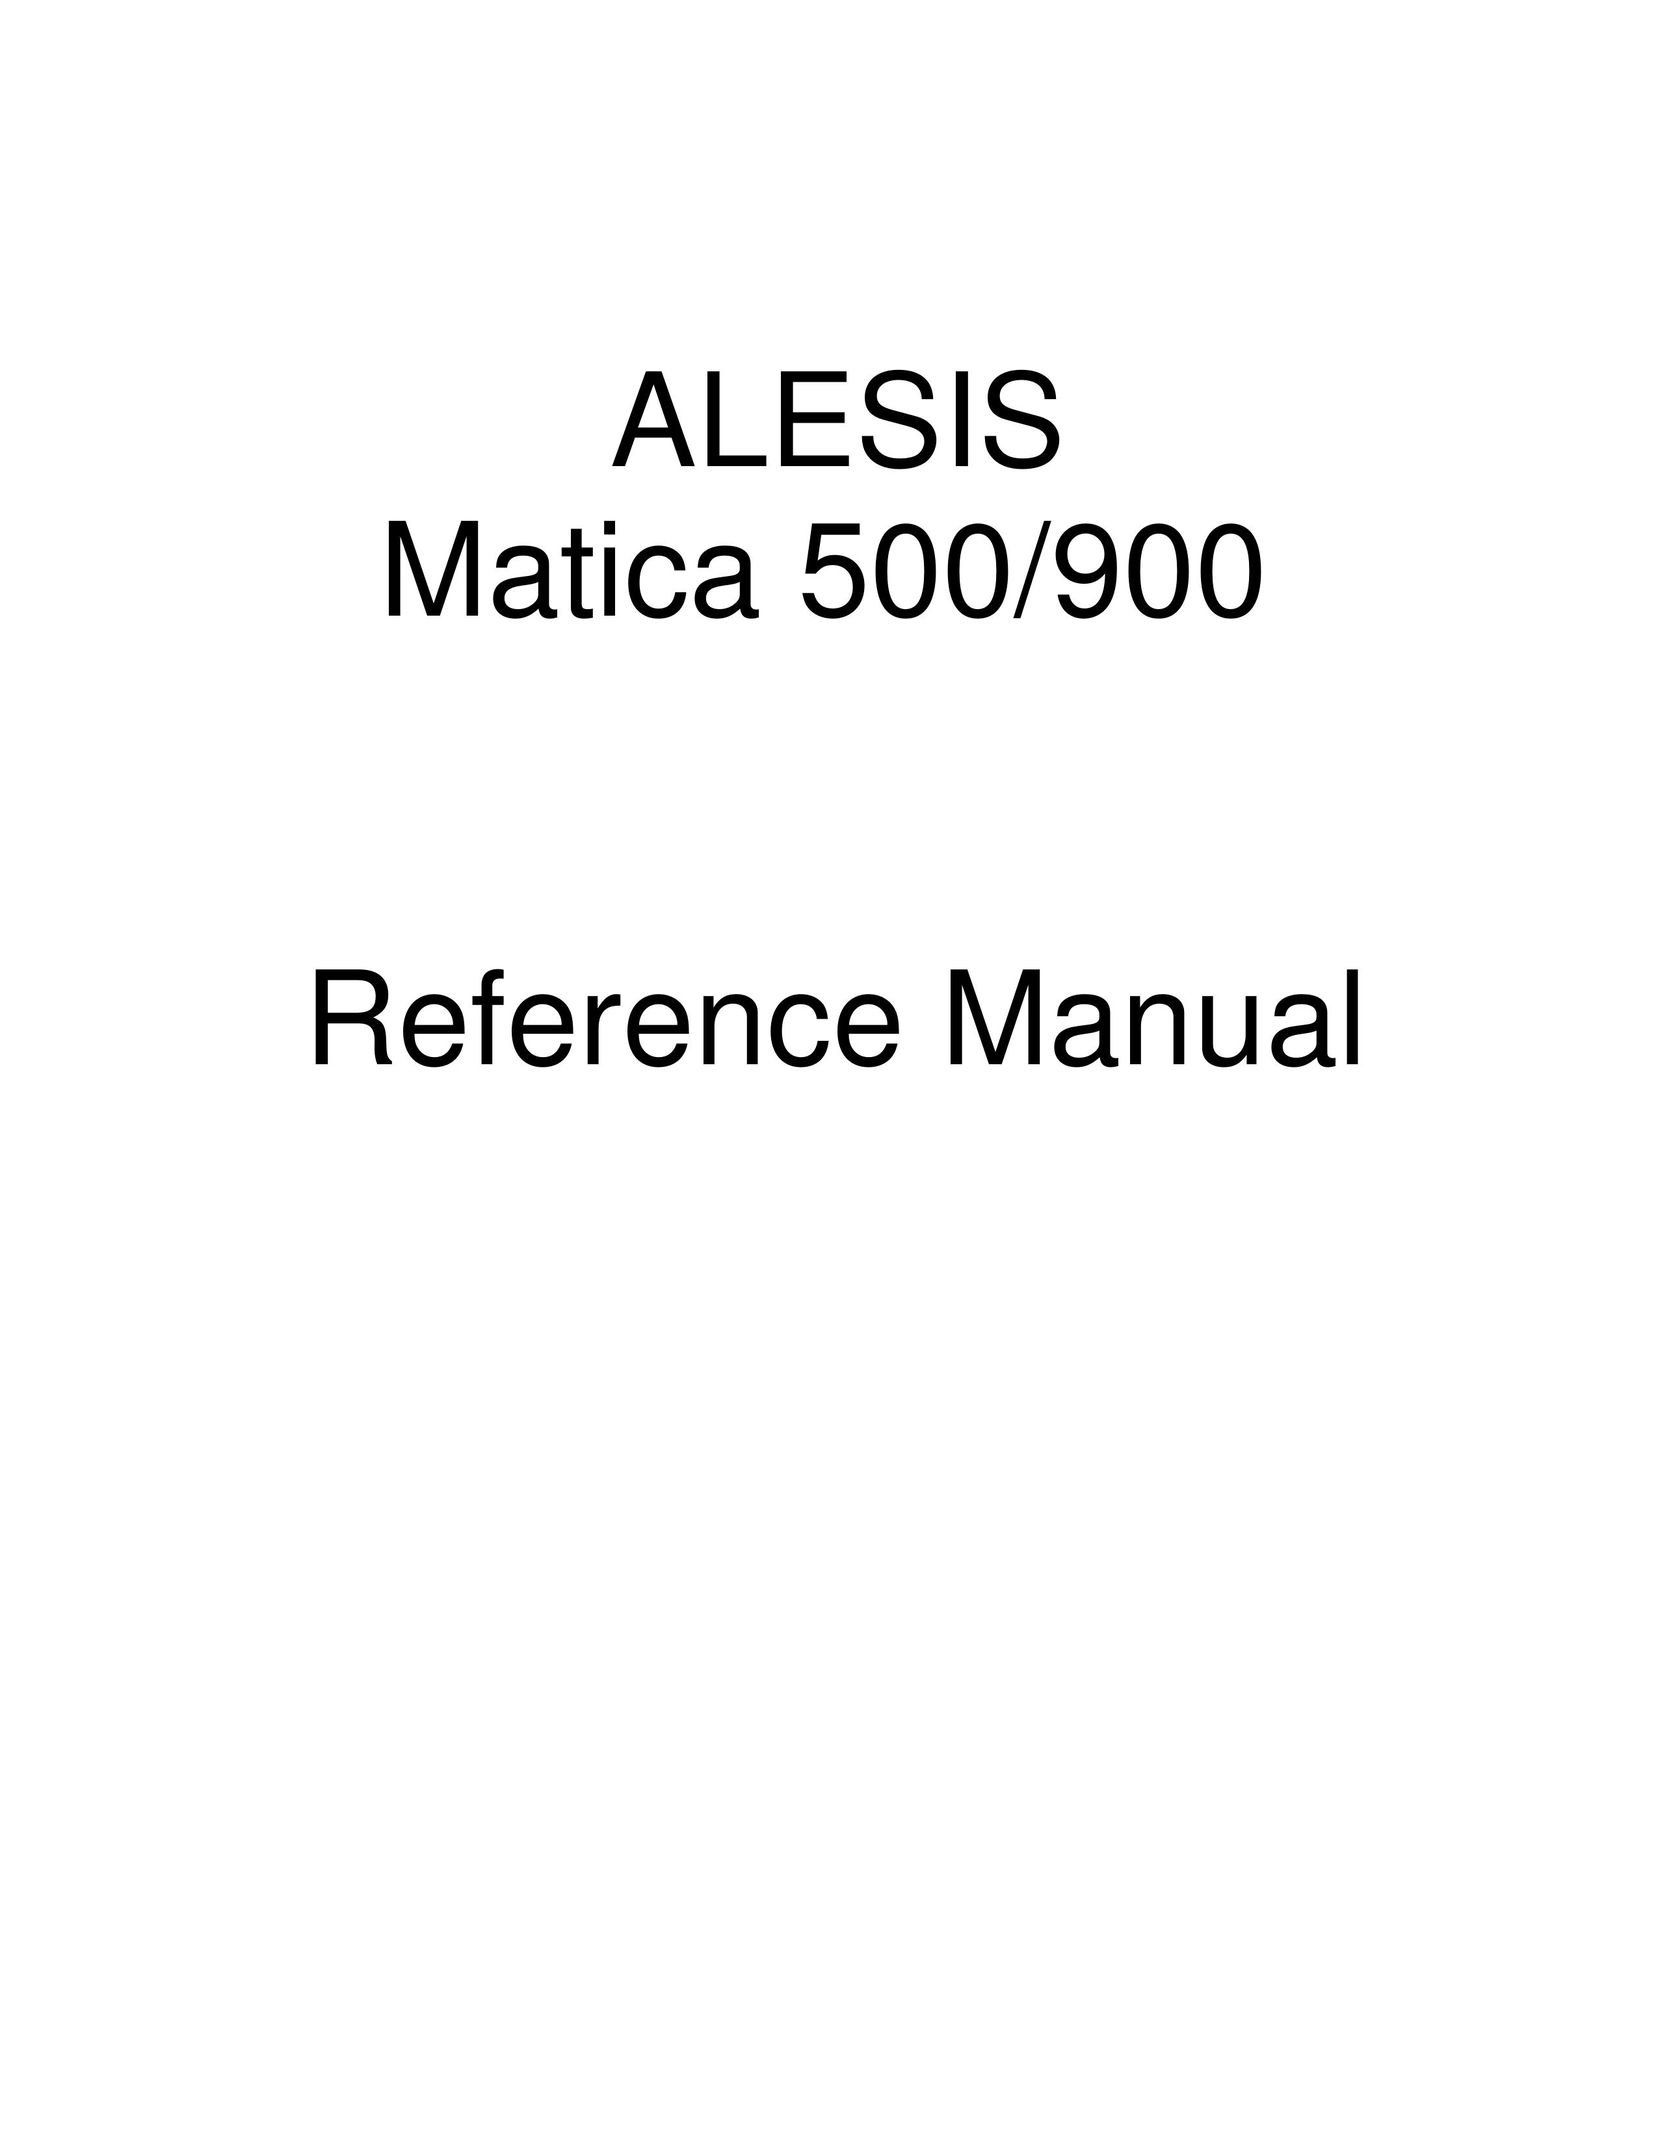 Alesis Matica 900 Stereo Amplifier User Manual